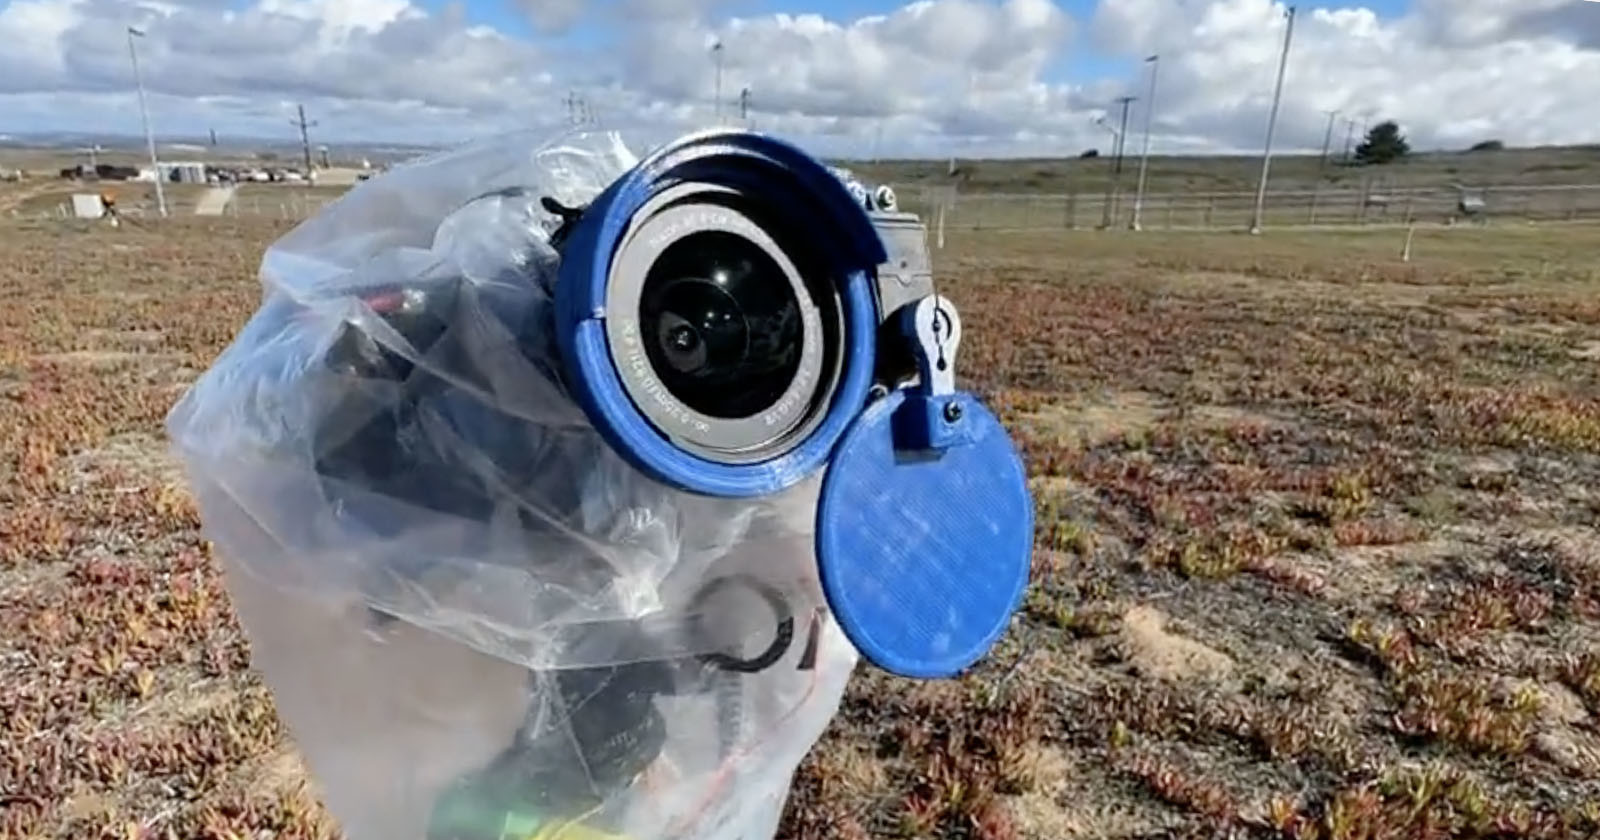  photographer automatic lens cap shields camera during rocket 